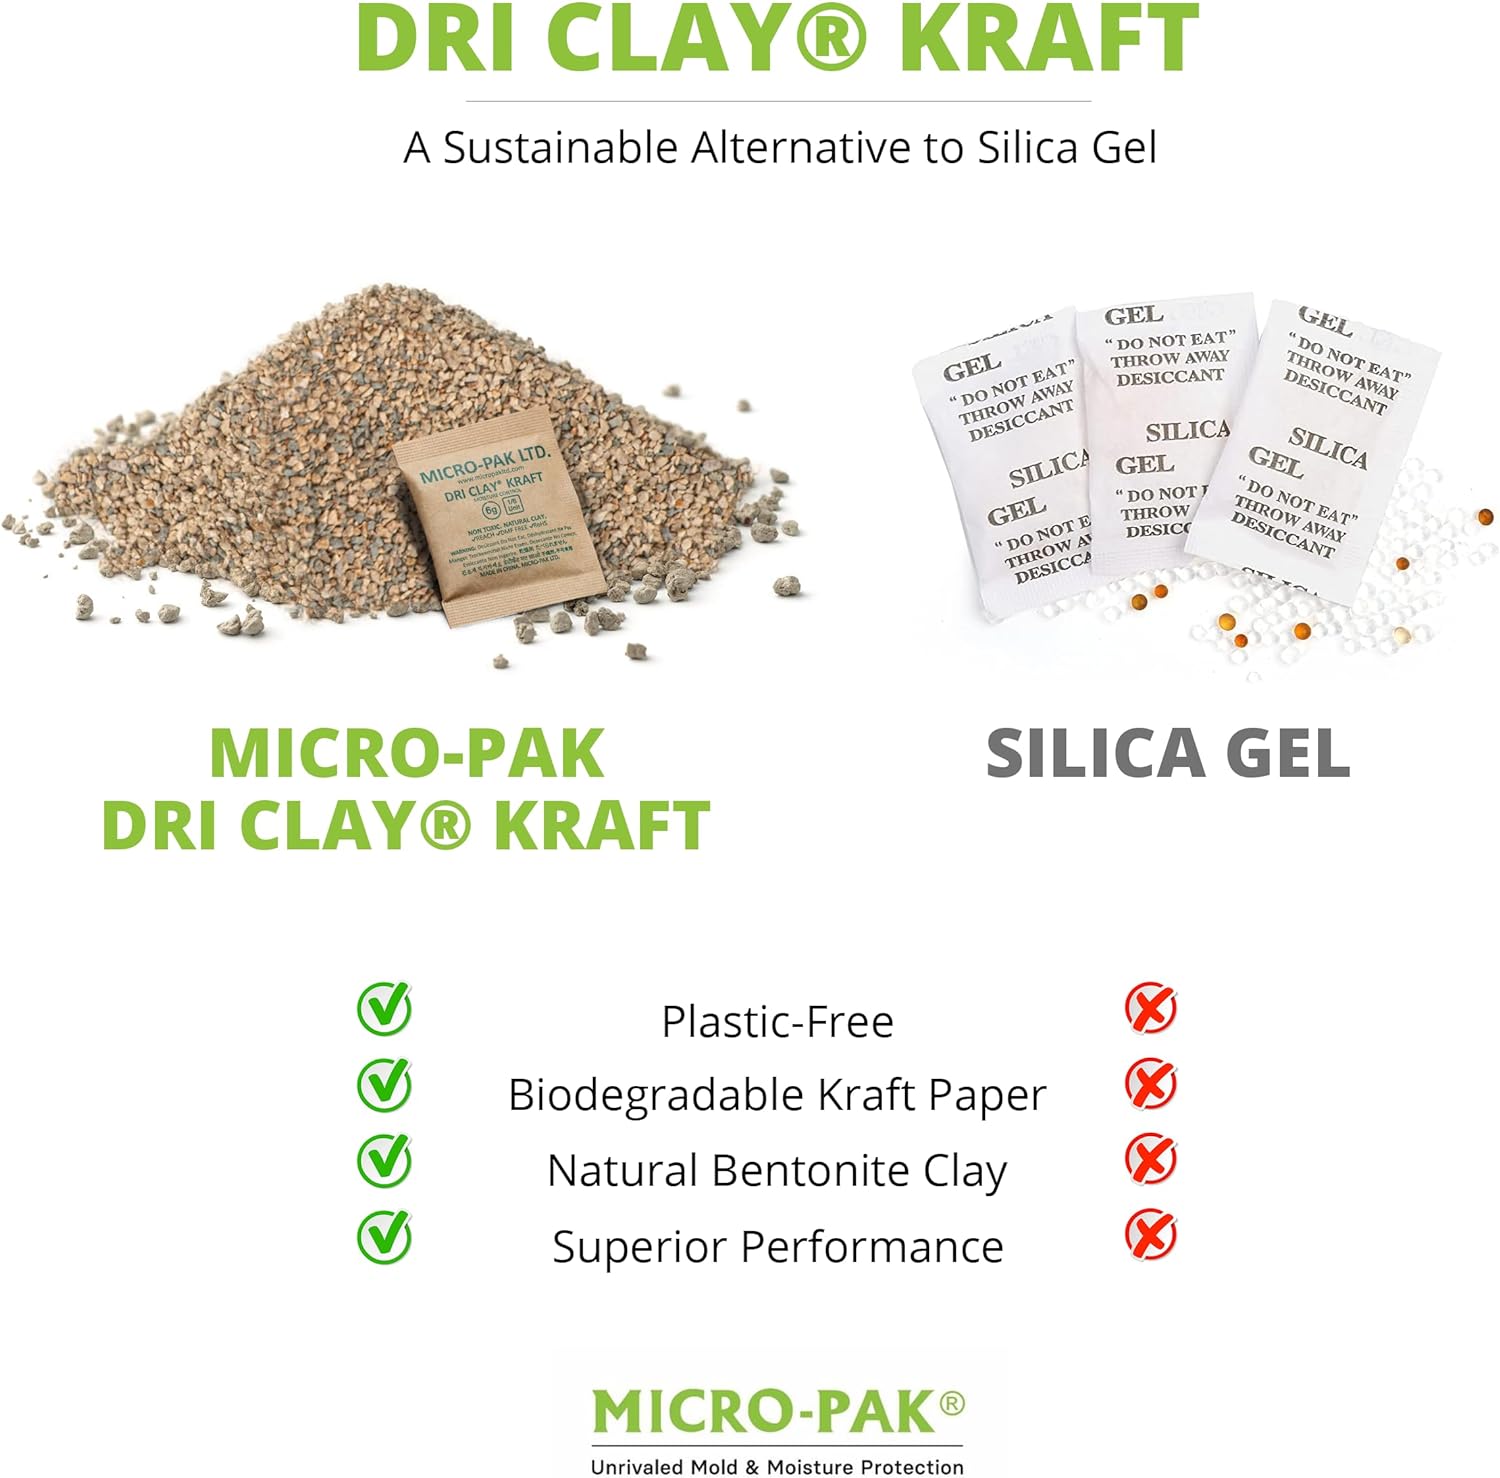 Micro-Pak Dri Clay Kraft Review